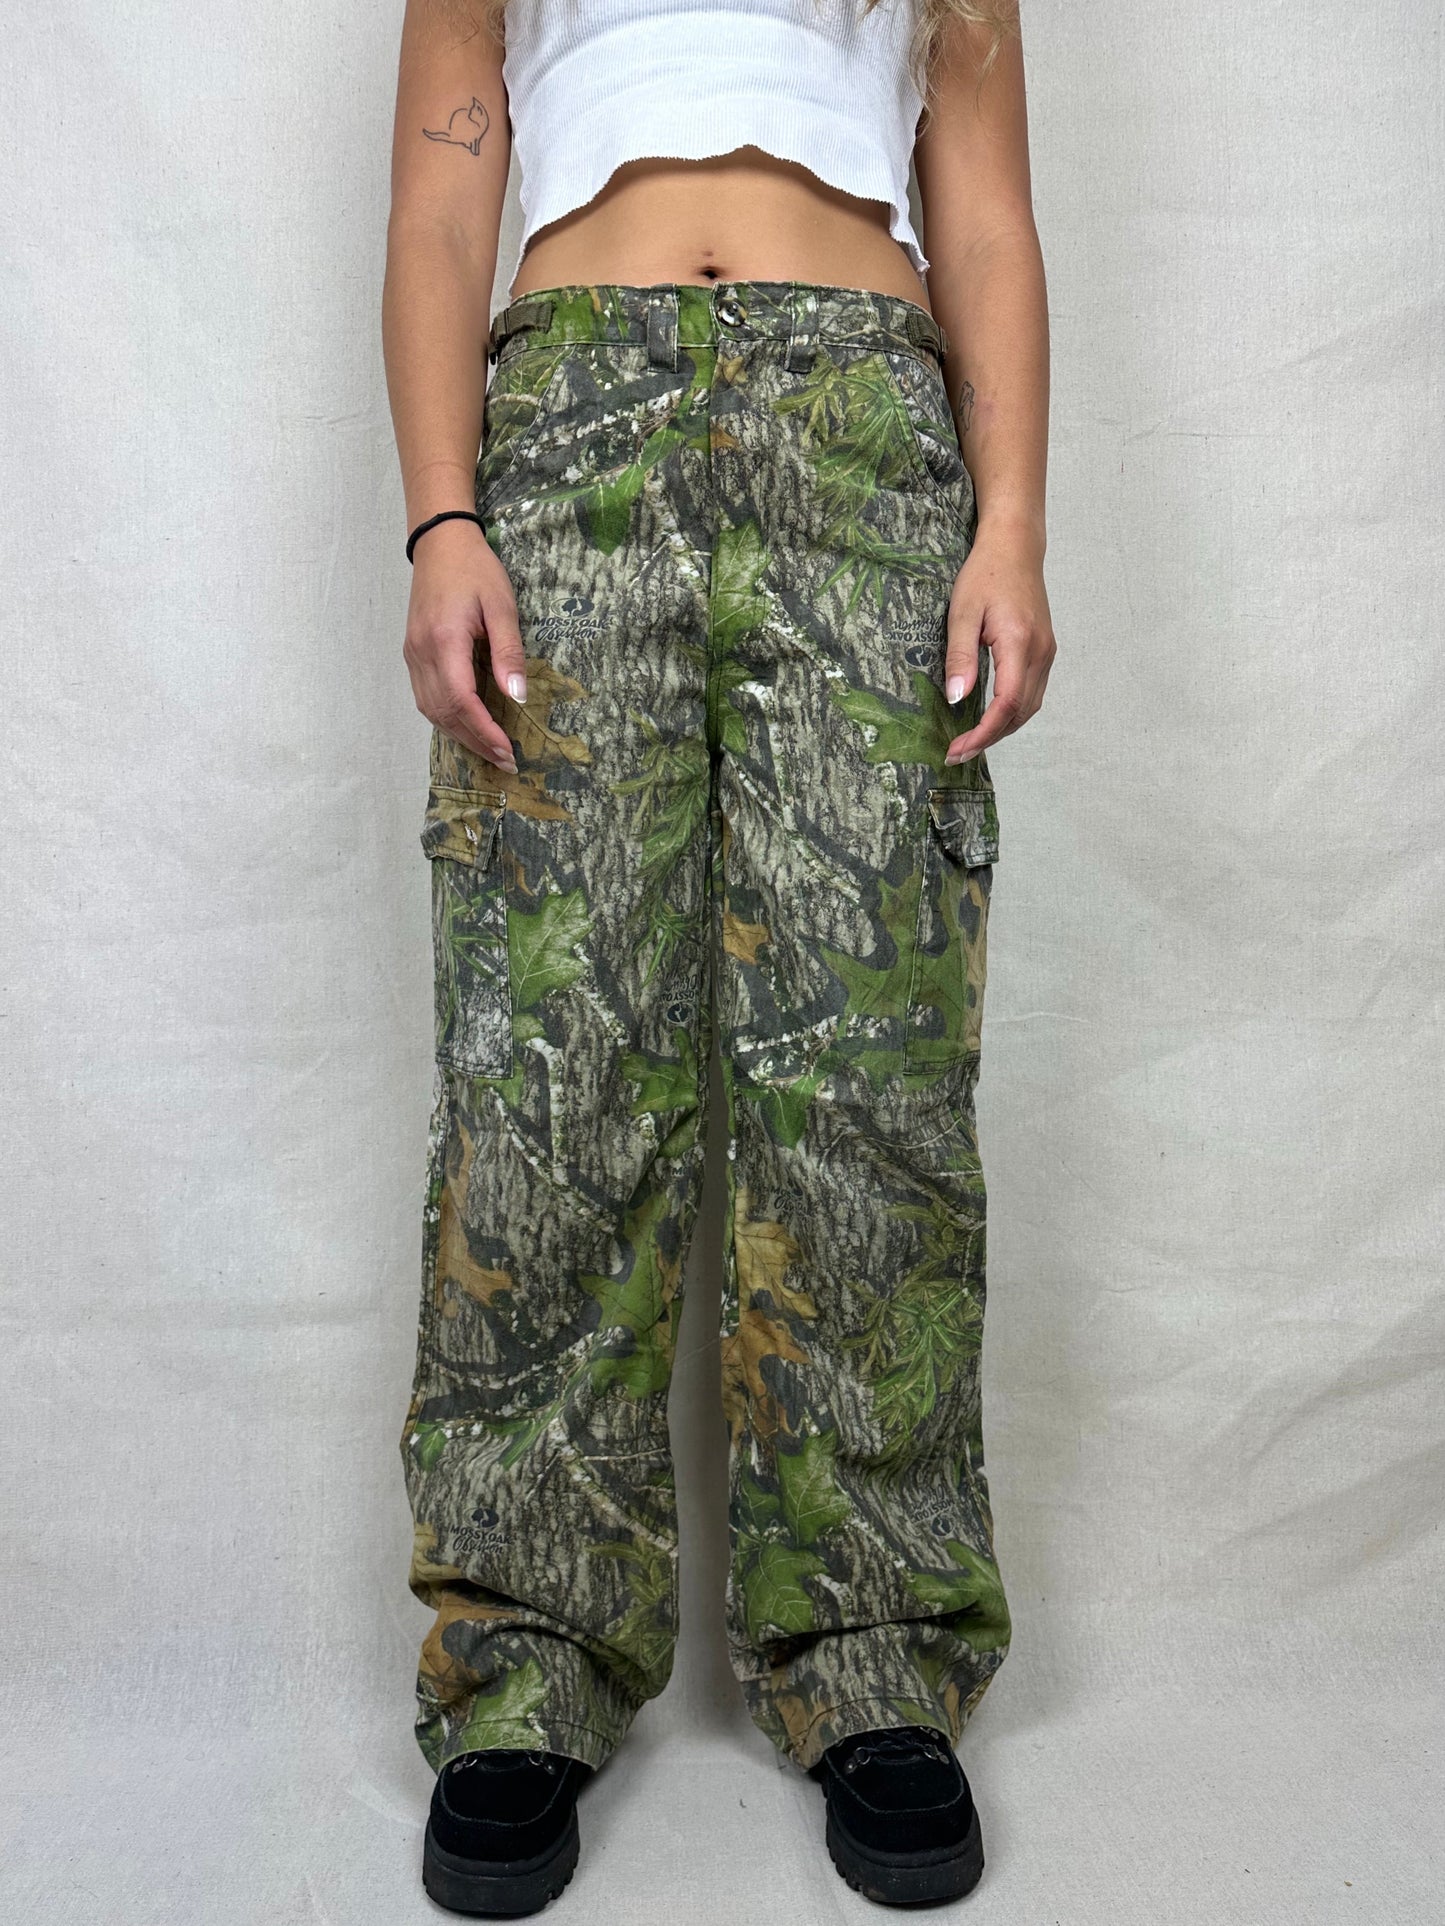 90's Realtree Camo Vintage Cargo Pants Size 31x31